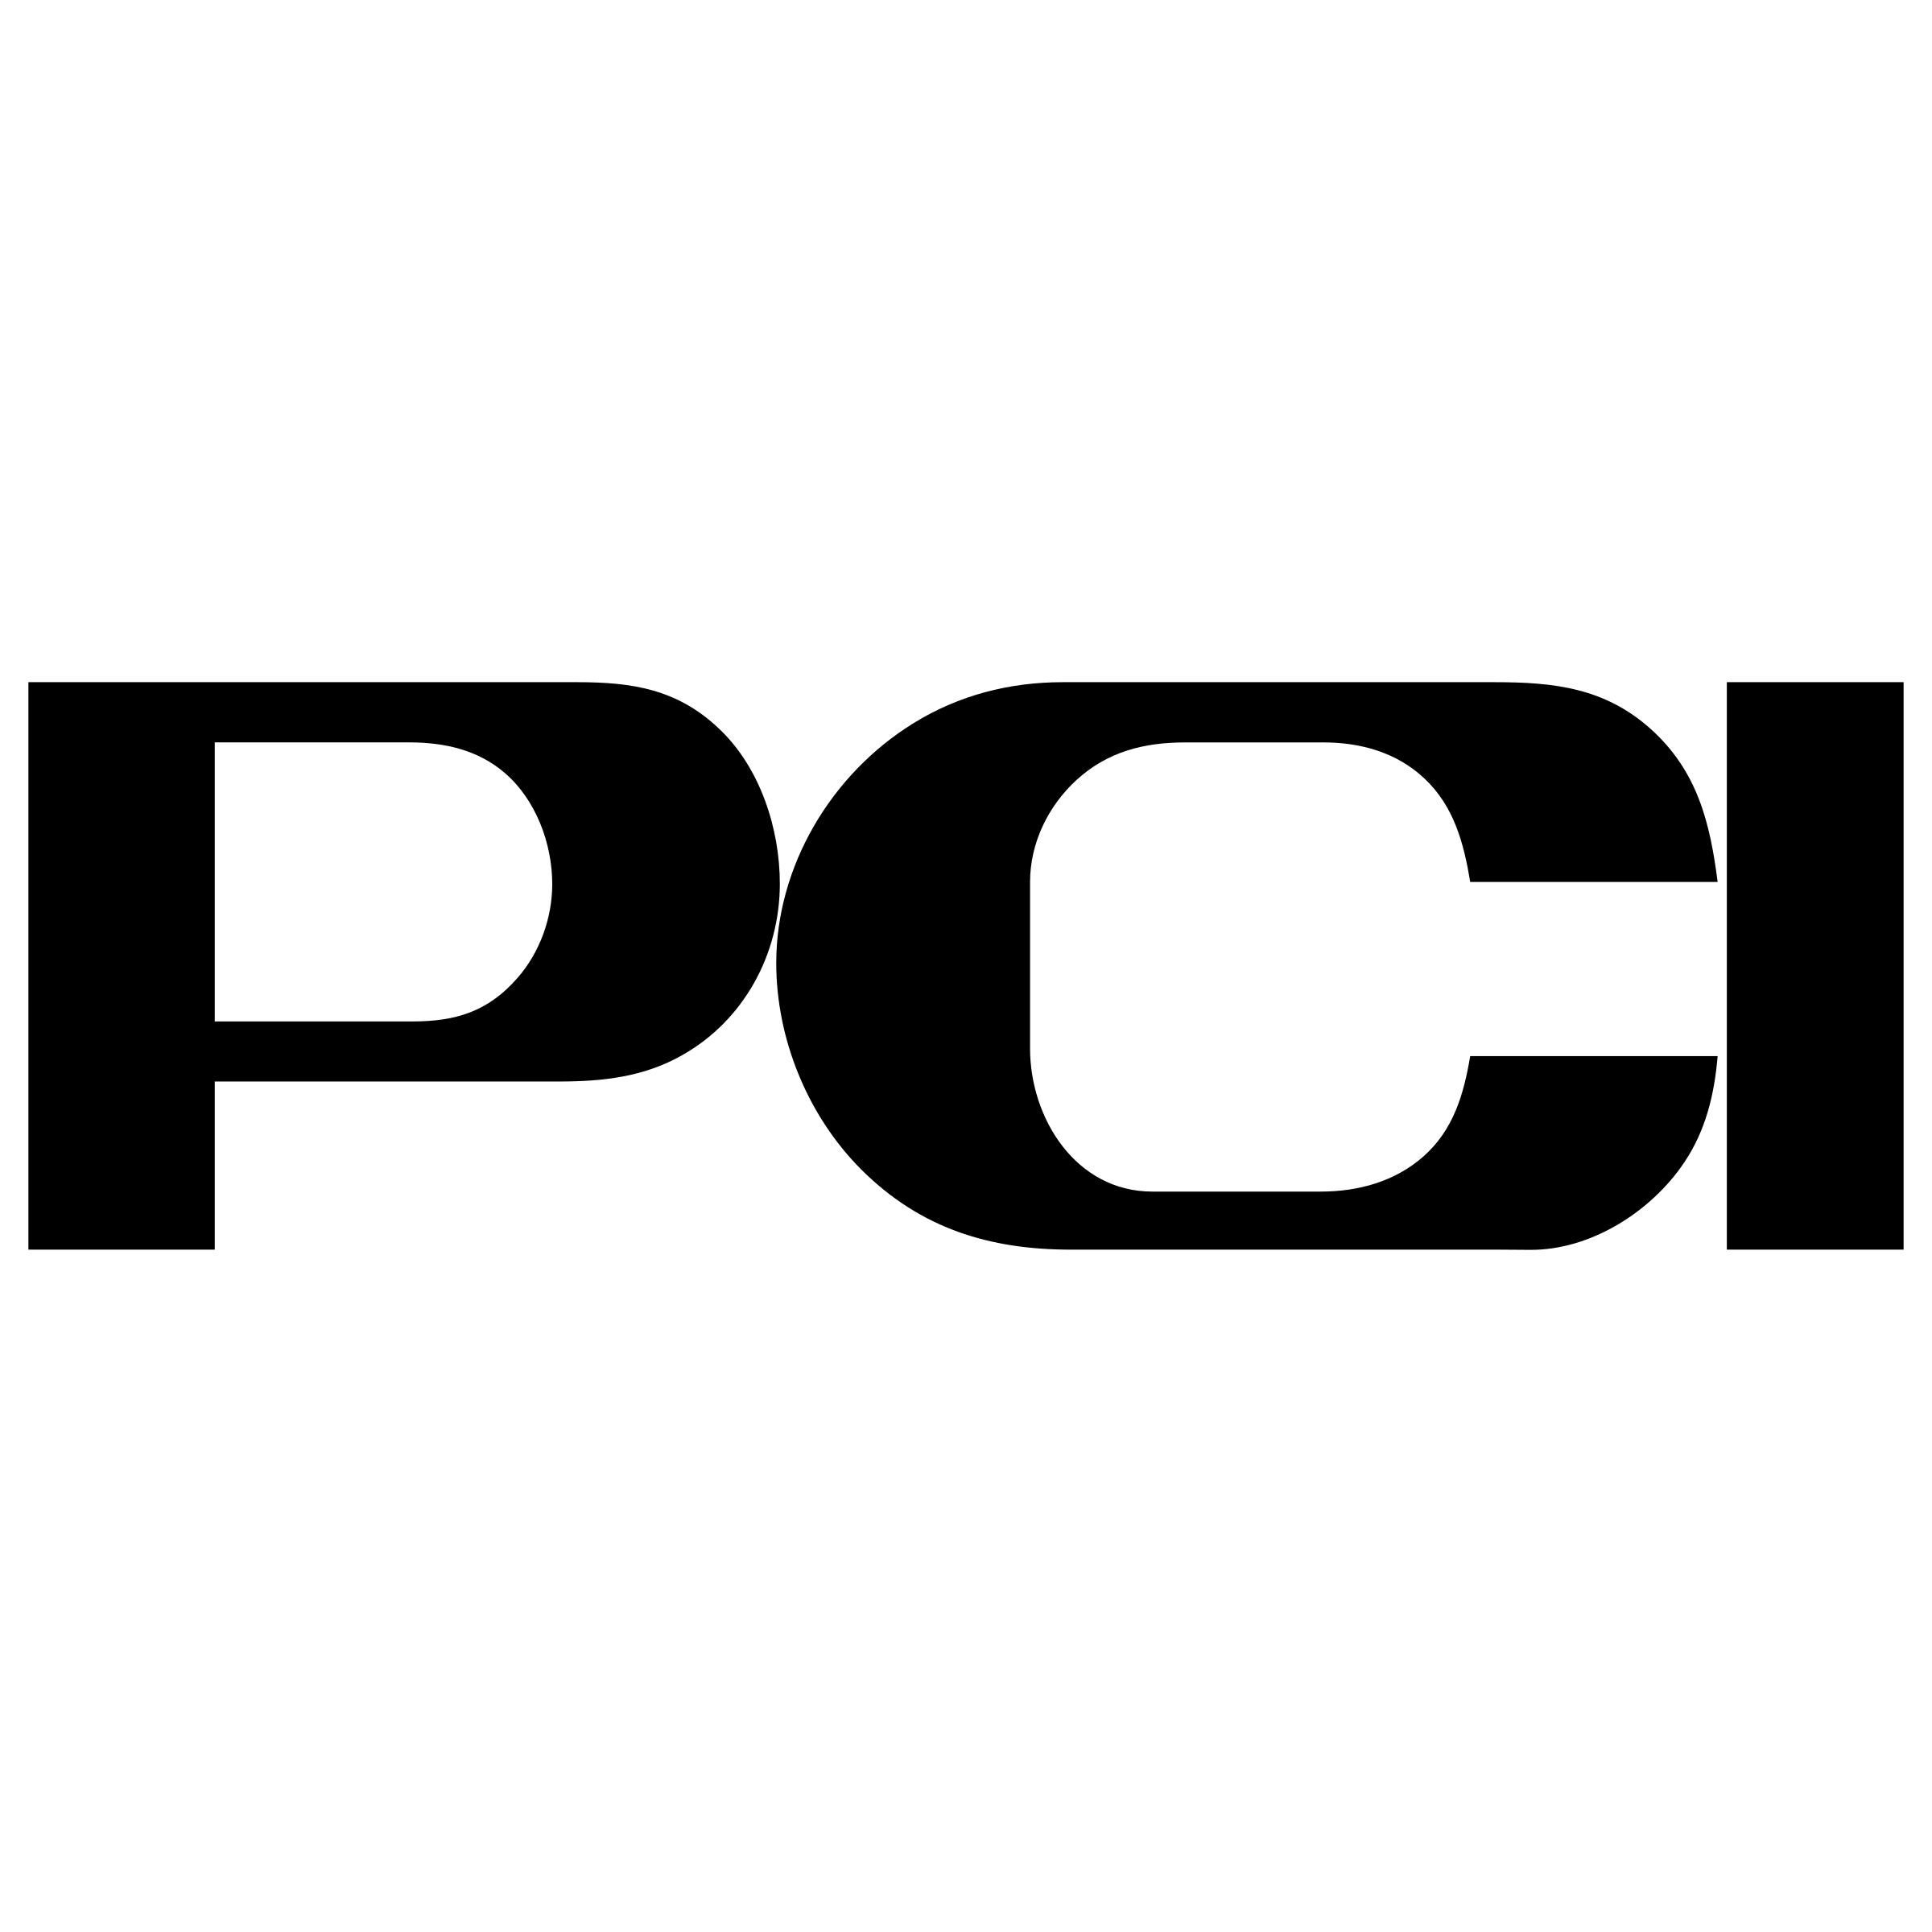 PCI Logo - PCI Logo PNG Transparent & SVG Vector - Freebie Supply